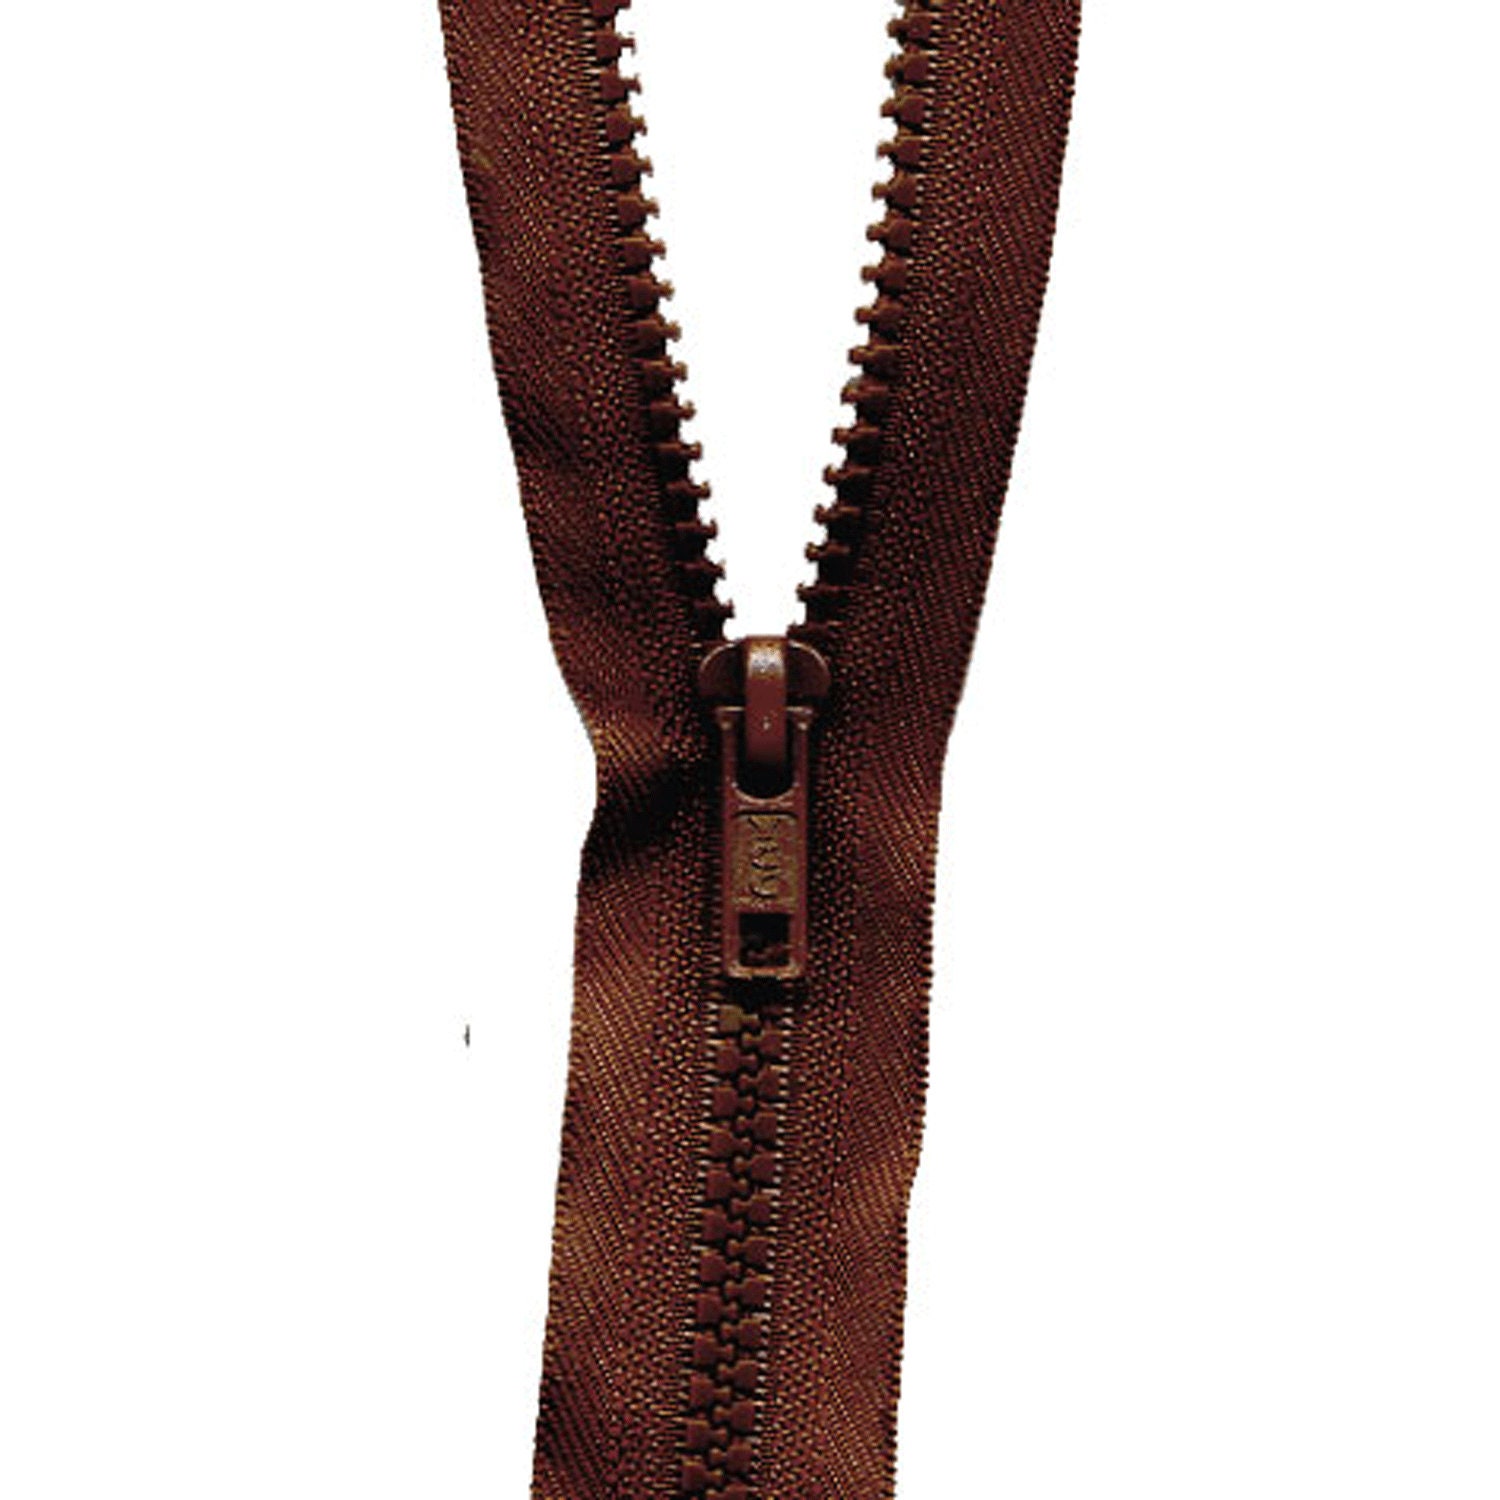 Mandala Crafts Black 28 inch Heavy Duty Zipper - #10 Silver Metal Zipper for Sewing - Separating Jacket Zipper for Coat Zipper Replacement